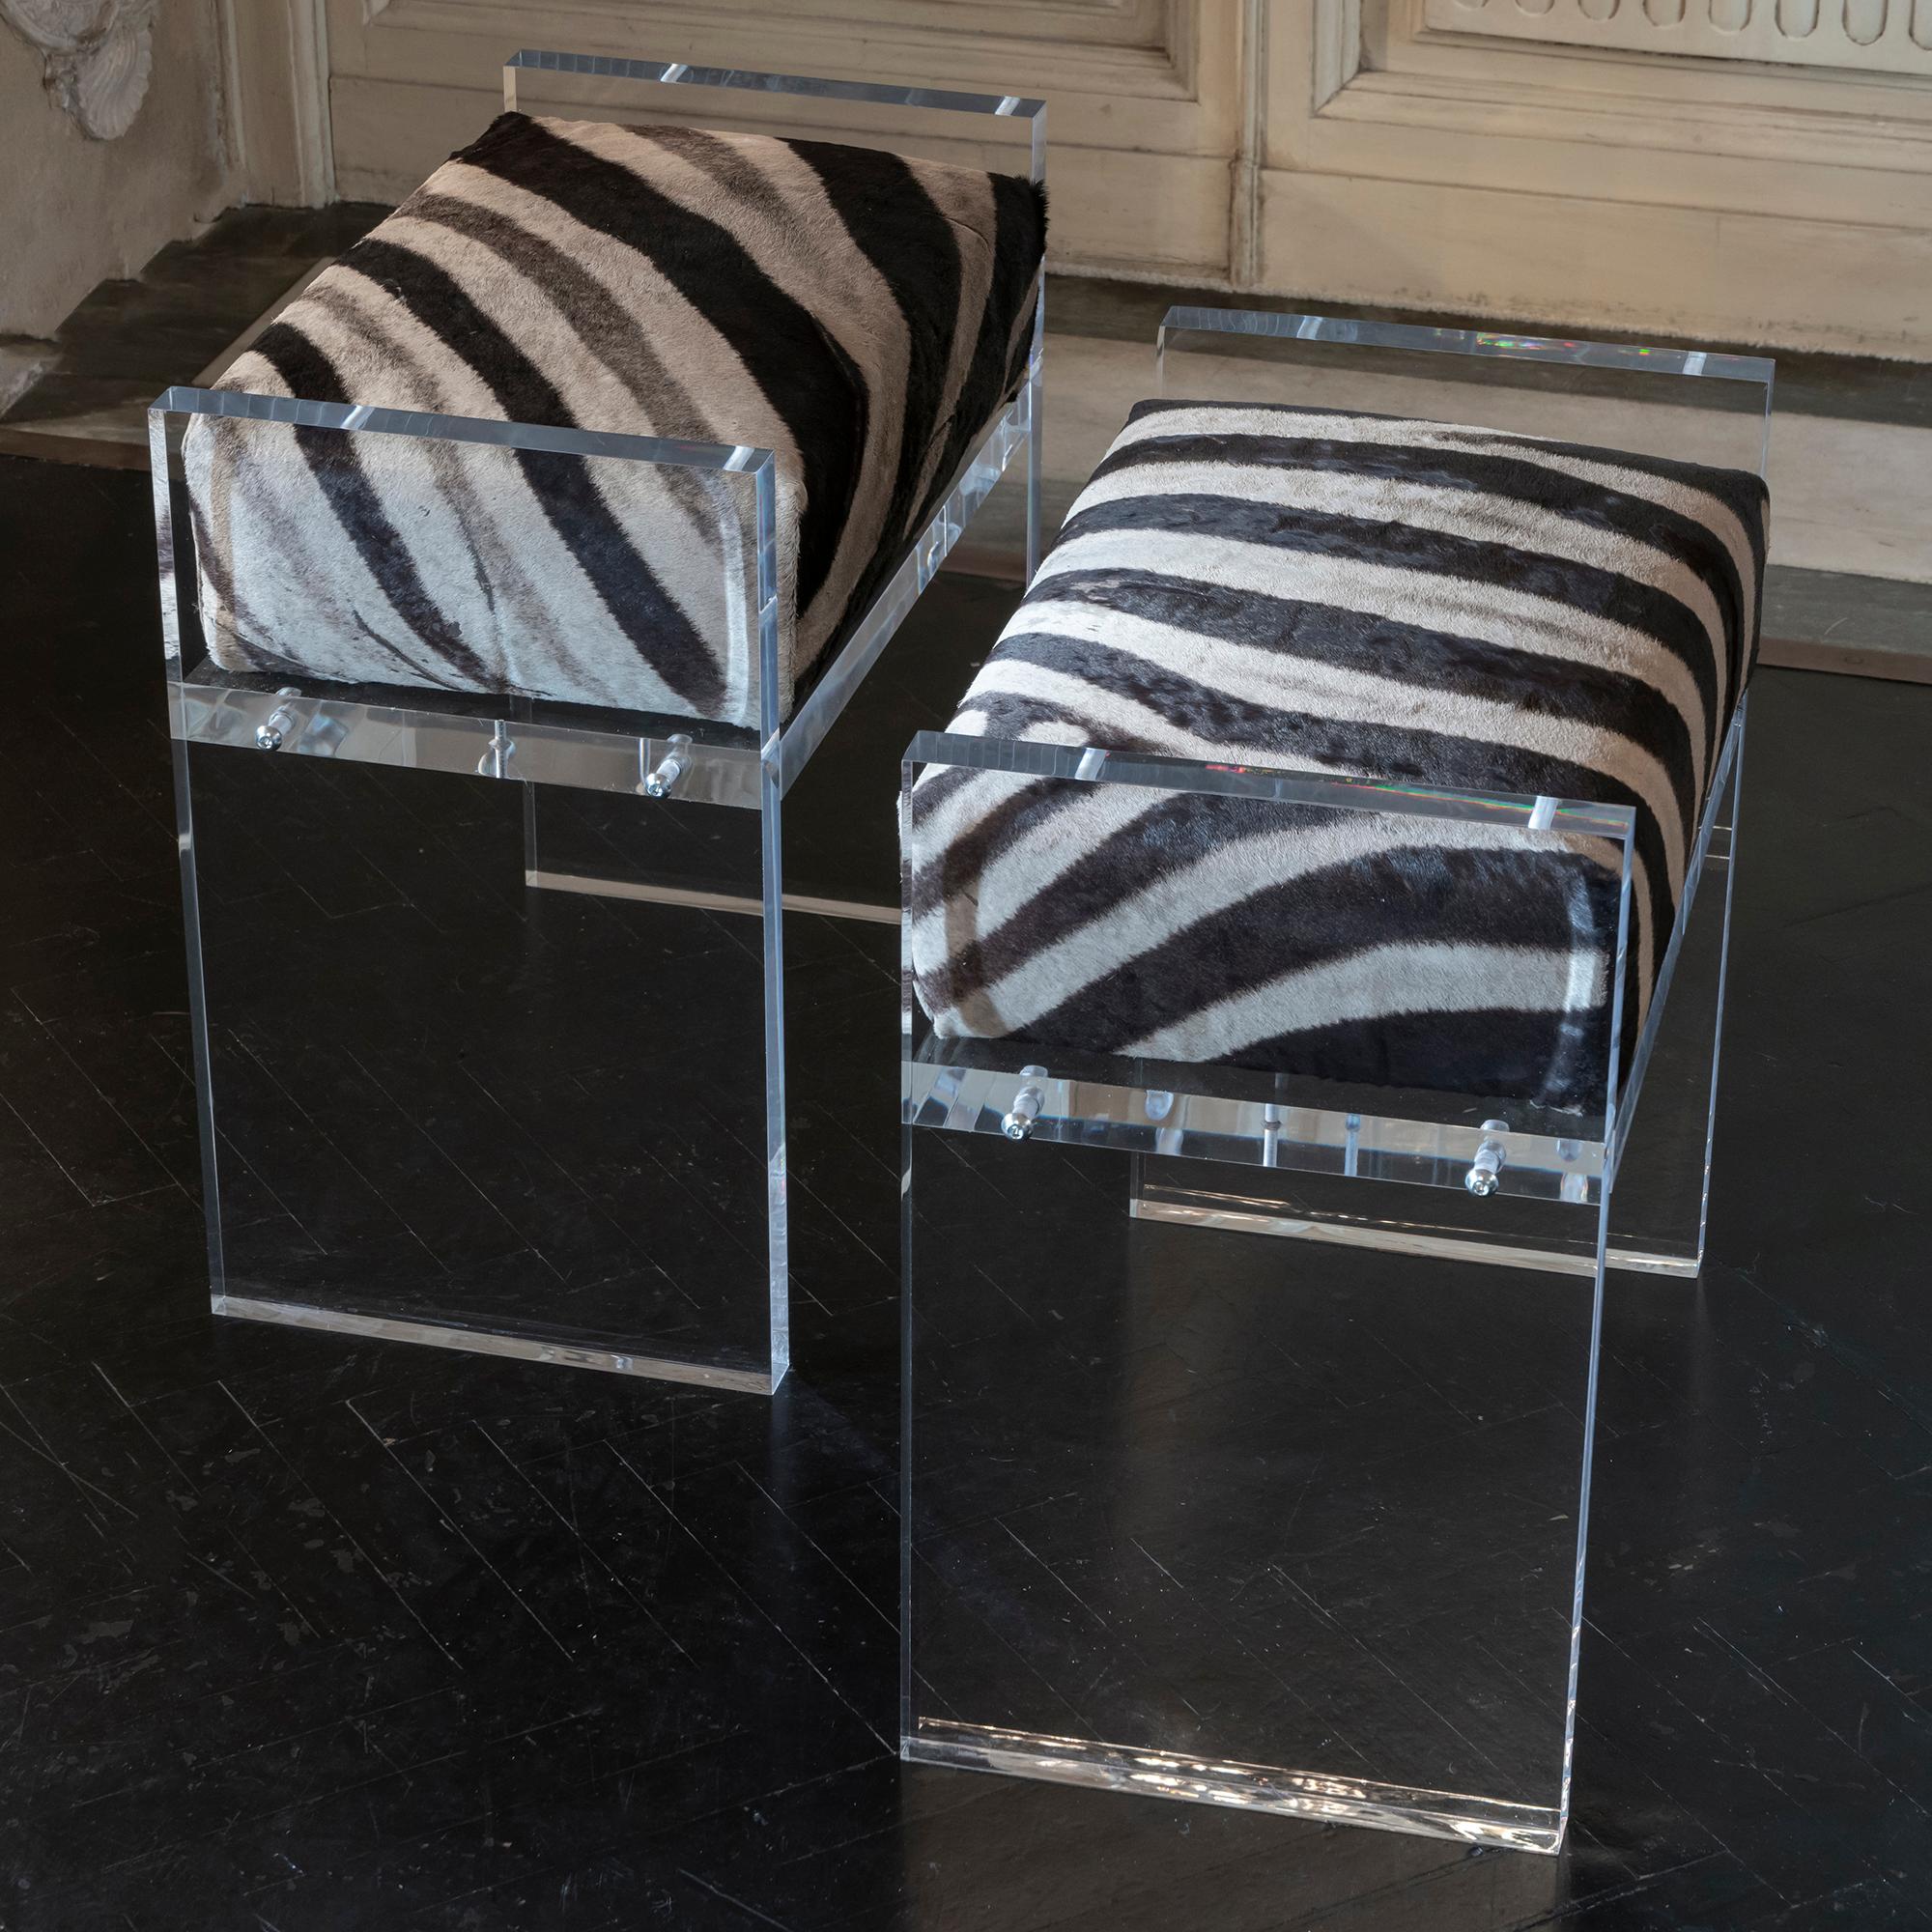 Animal Skin Contemporary Pair of Stools, Zebra Skin and Clear Plexiglass, Italy, 2020